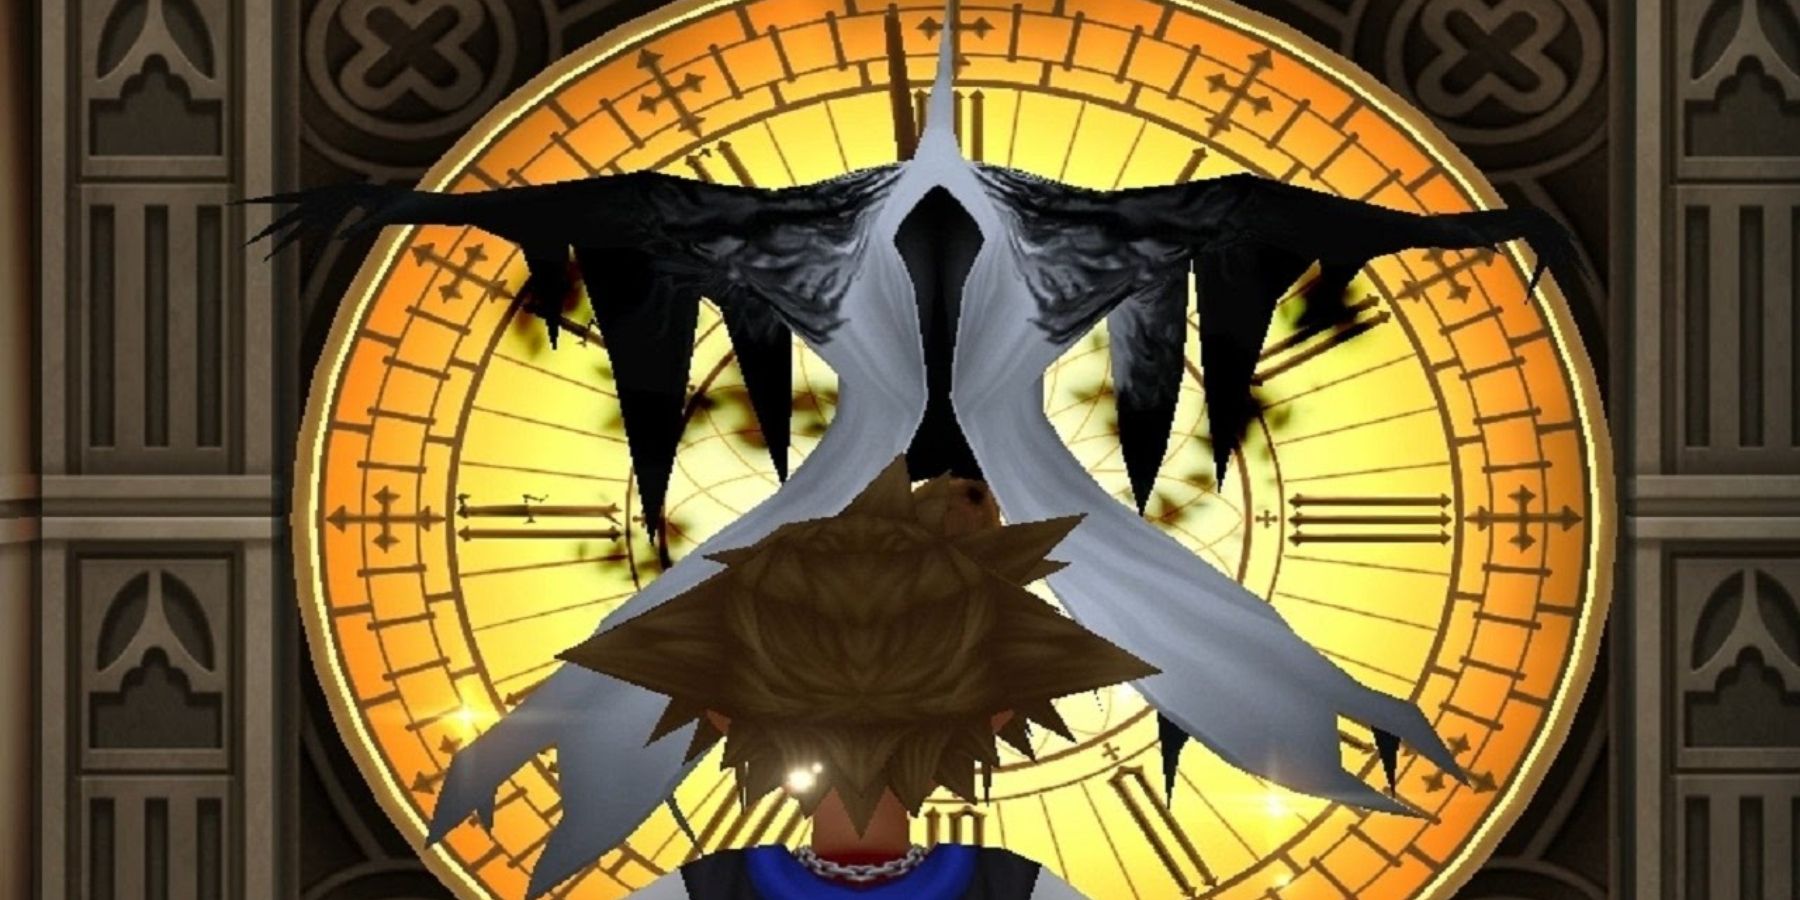 Sora facing the Phantom in Kingdom Hearts